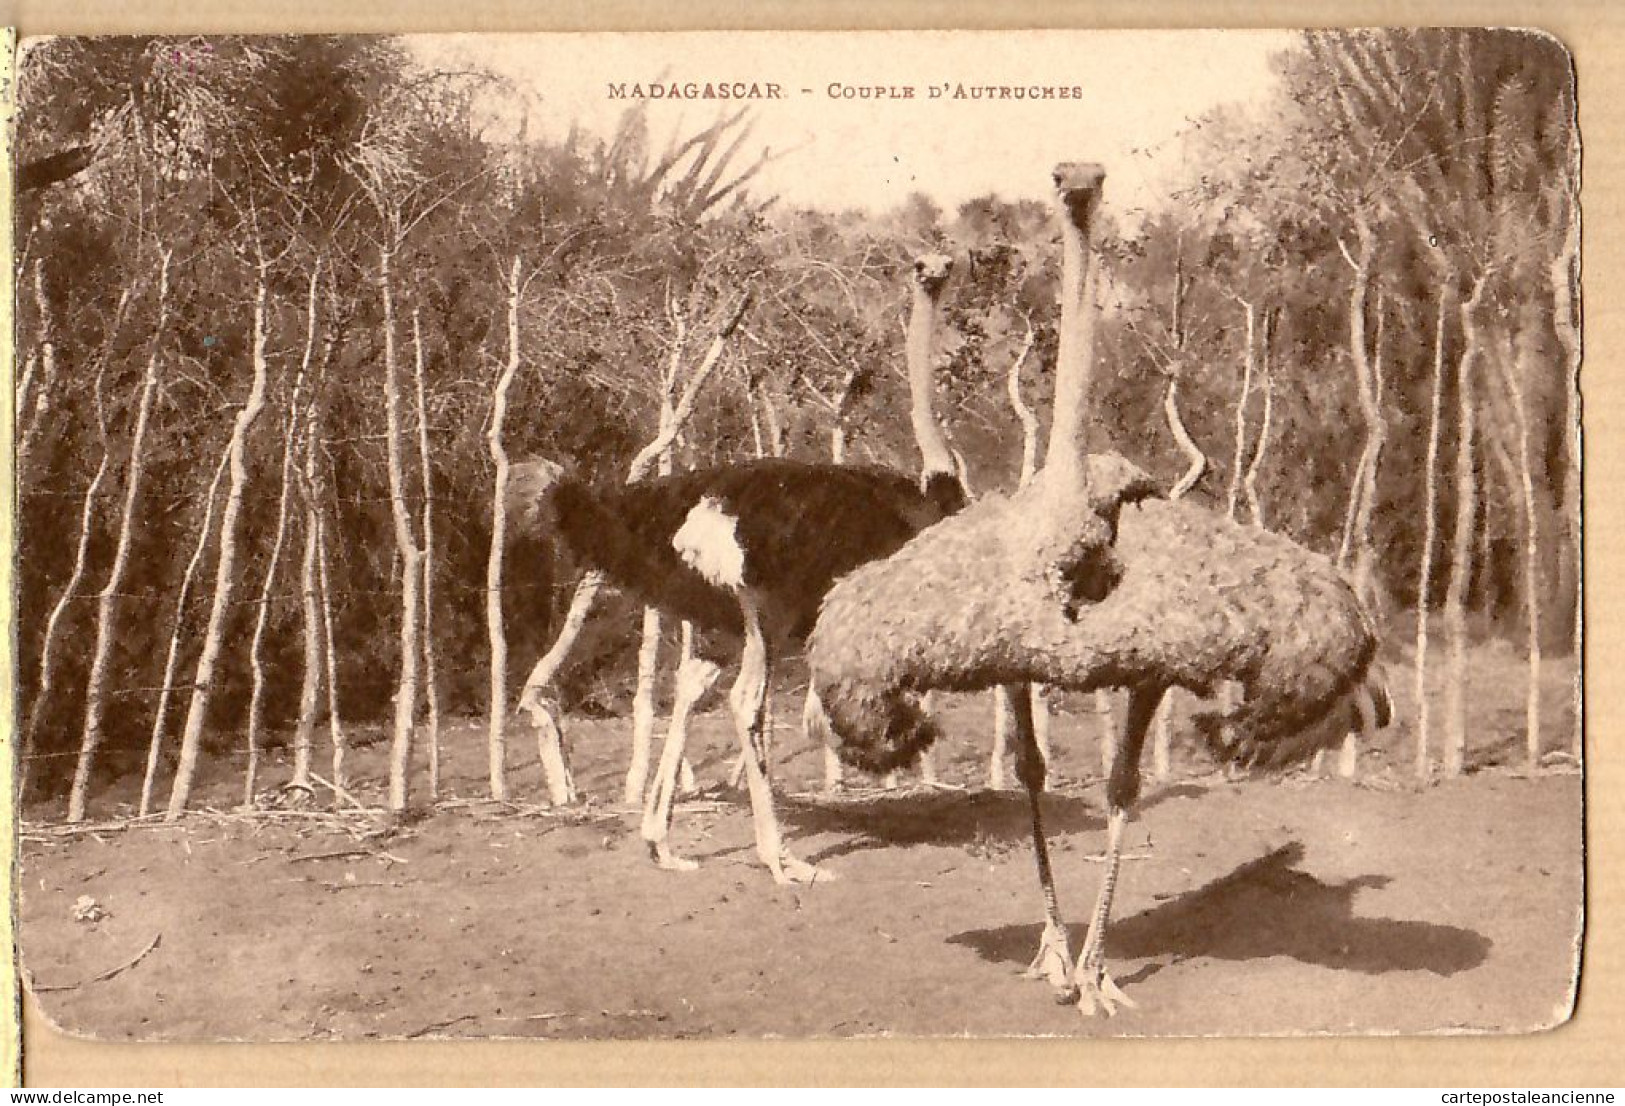 30729 / Madagascar Couple AUTRUCHES Ostrich Strauß Struisvogel Avestruz Madagaskar 1920s - Madagascar